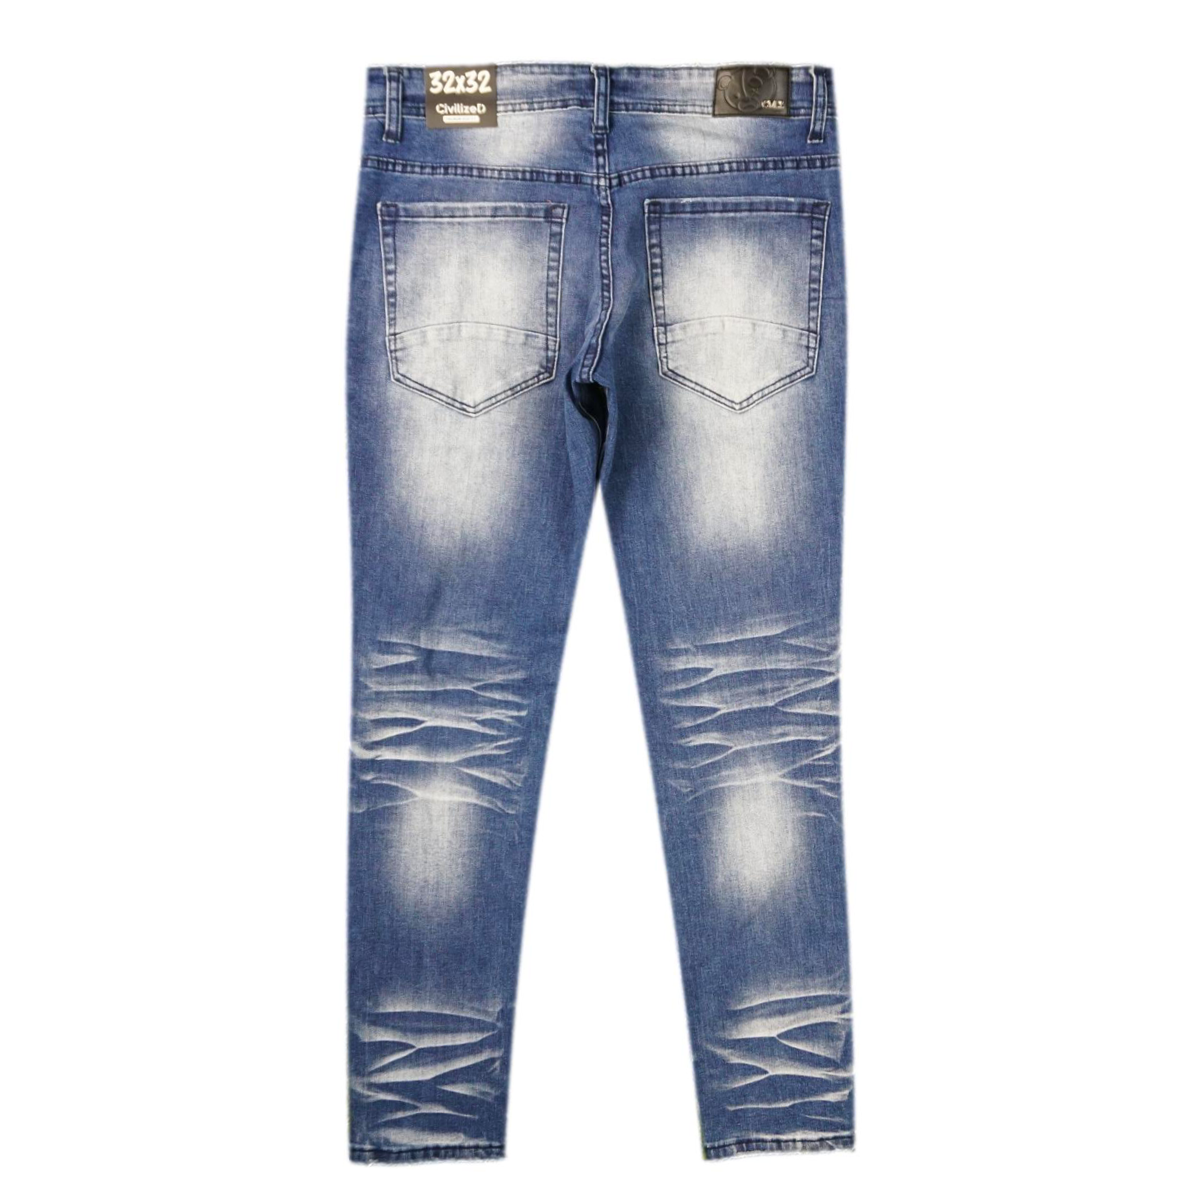 Godspeed Patchwork Jeans (Blue) /C6